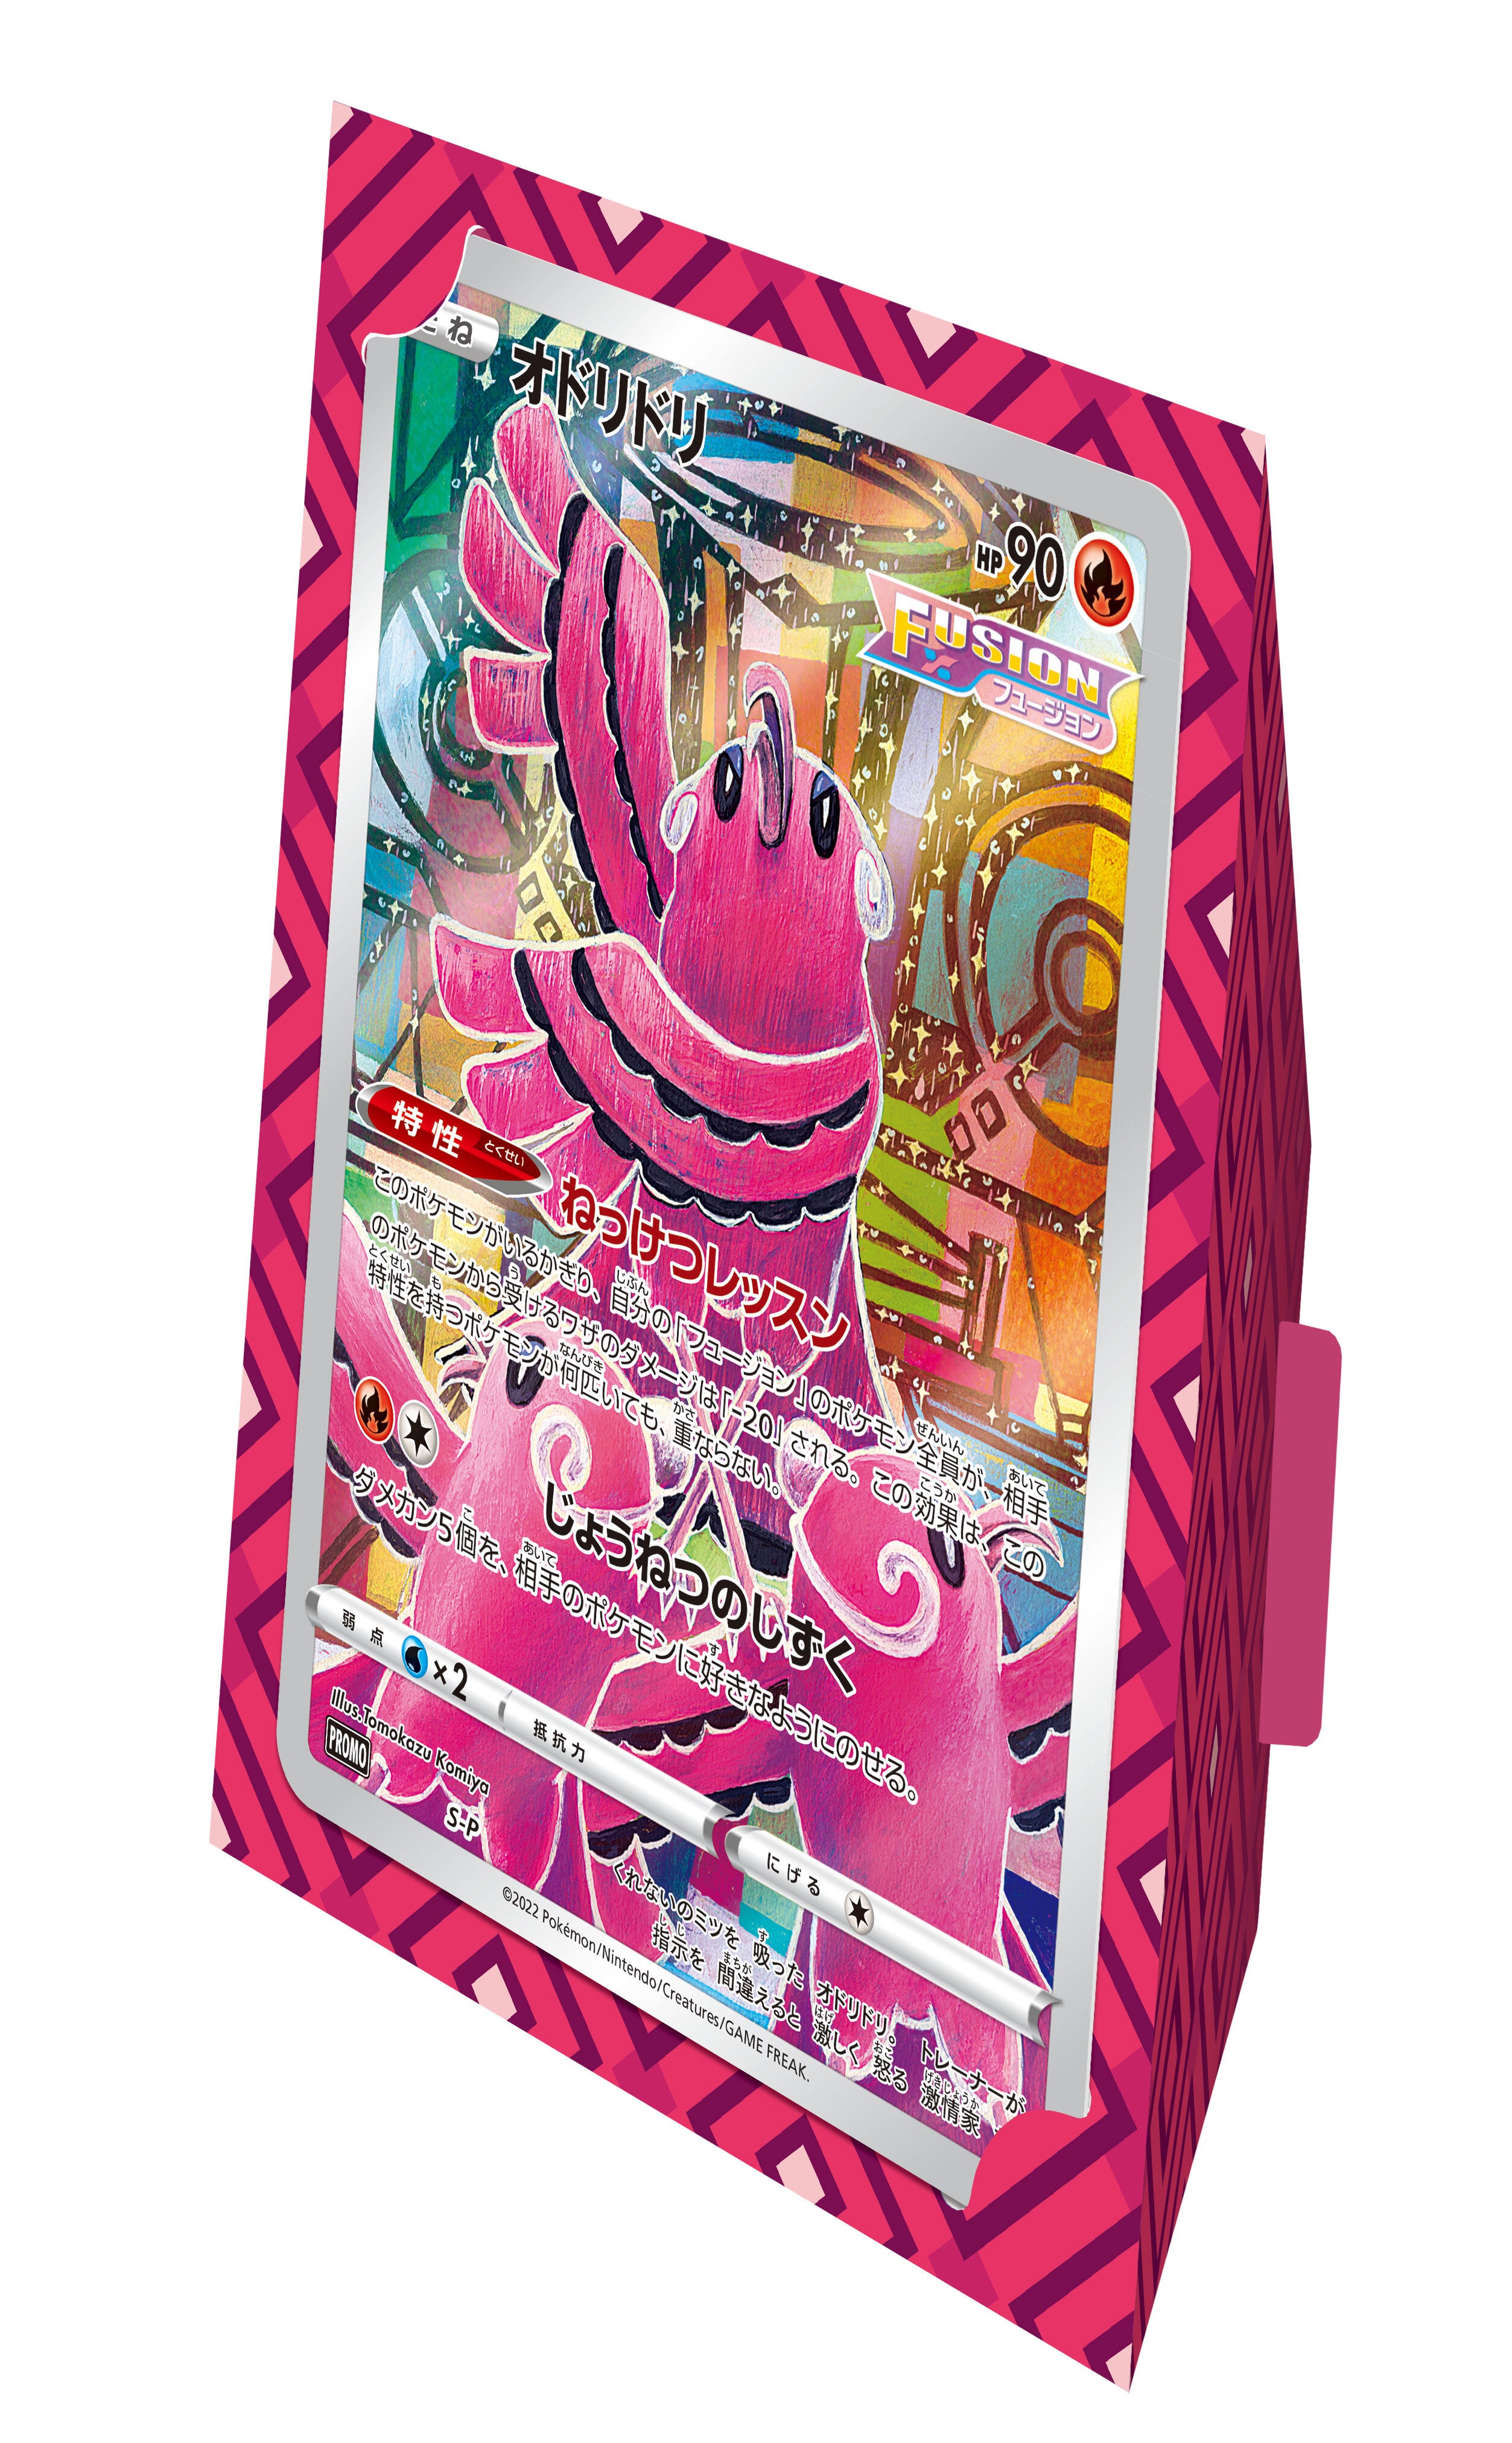 PSA 10] Pokemon Card “MEW” s12a 183/172 AR Japanese Version – K-TCG